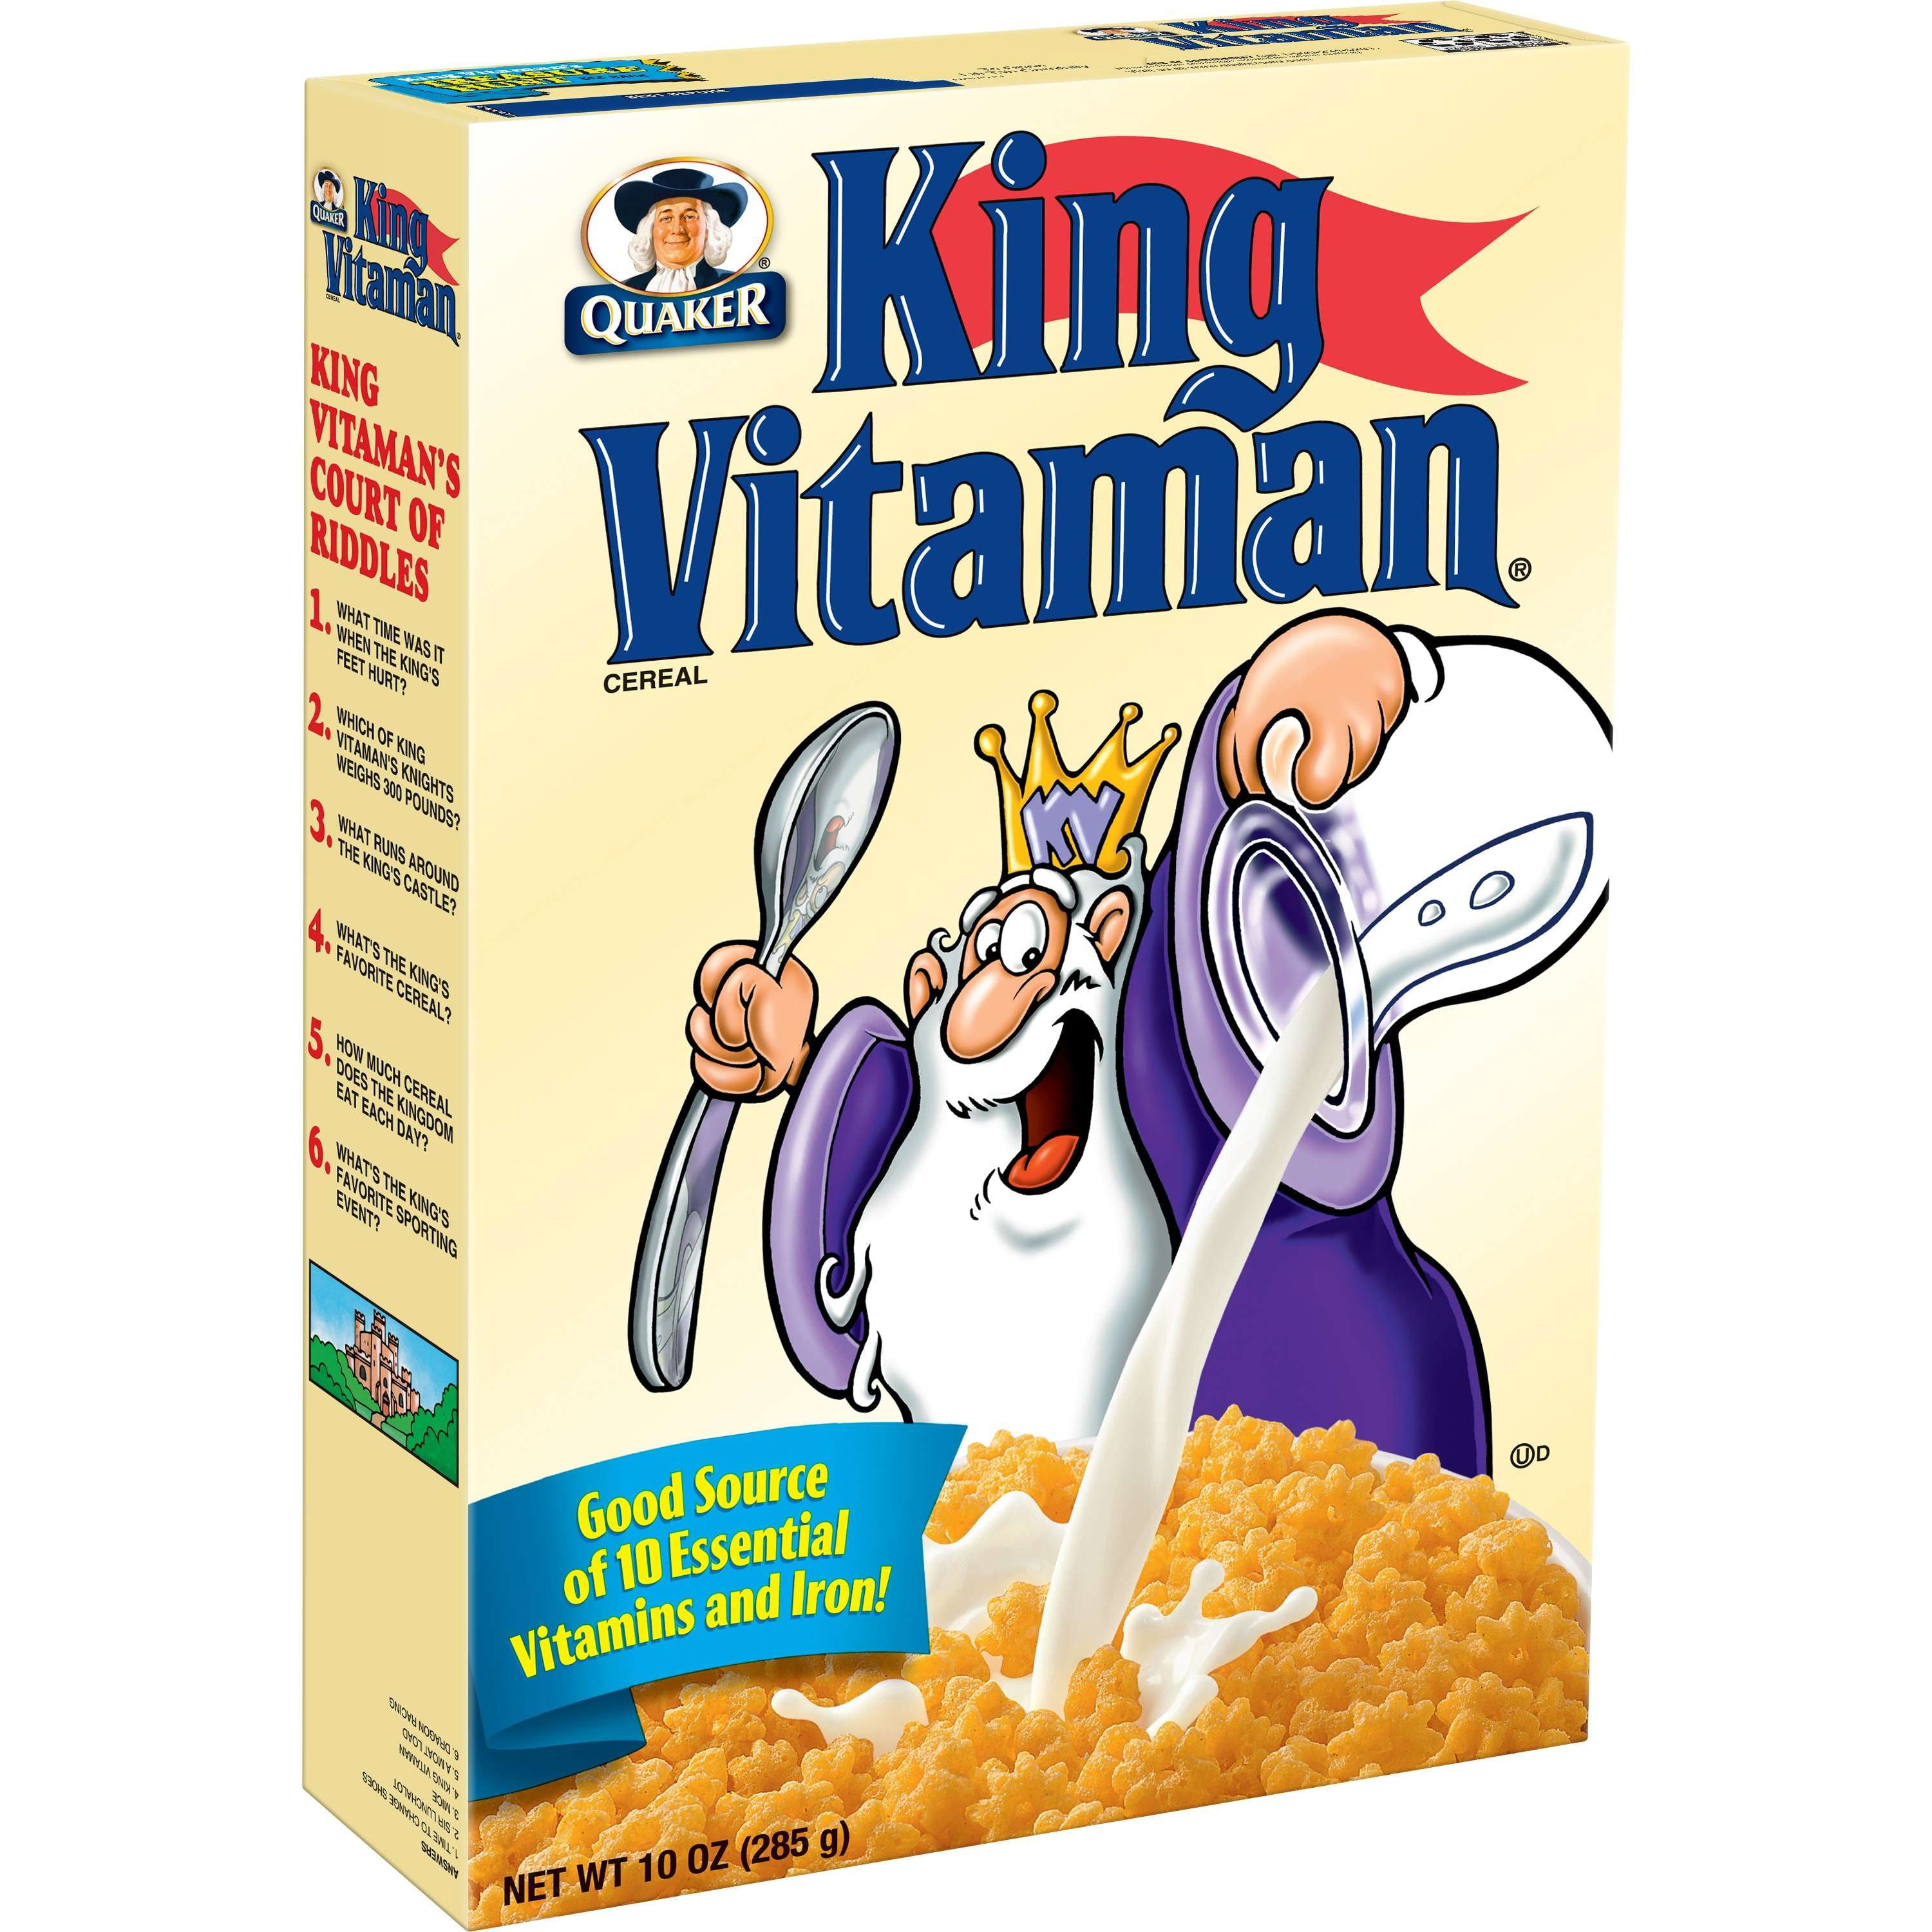 King vitamin cereal i have i pad but i have no computer